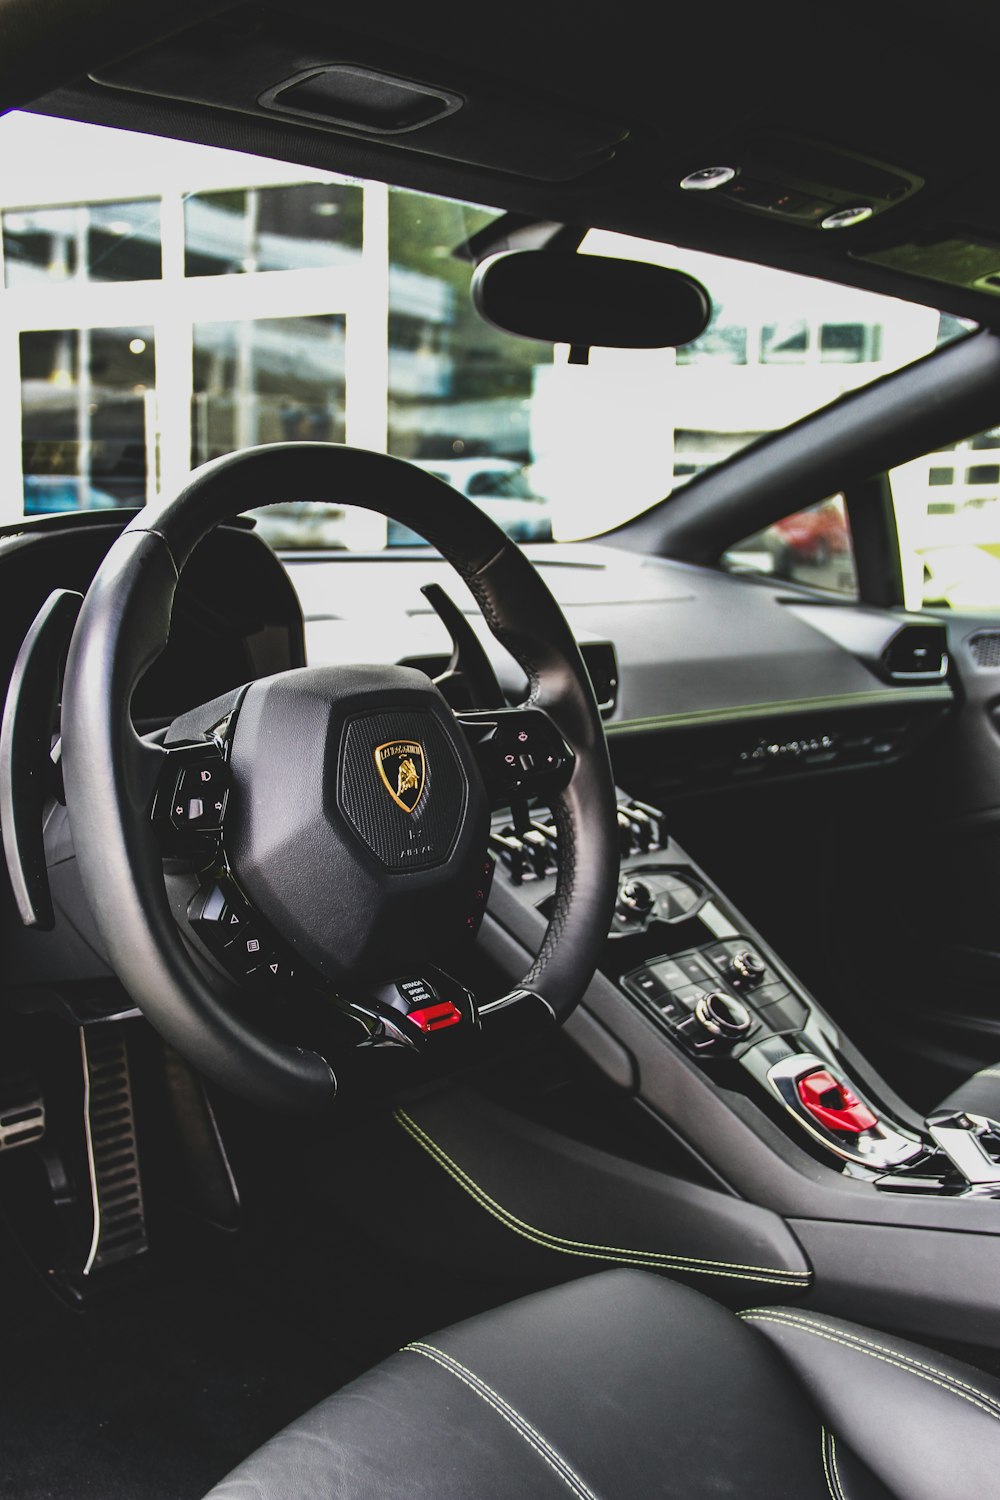 Black Lamborghini Vehicle Interior During Daytime Photo